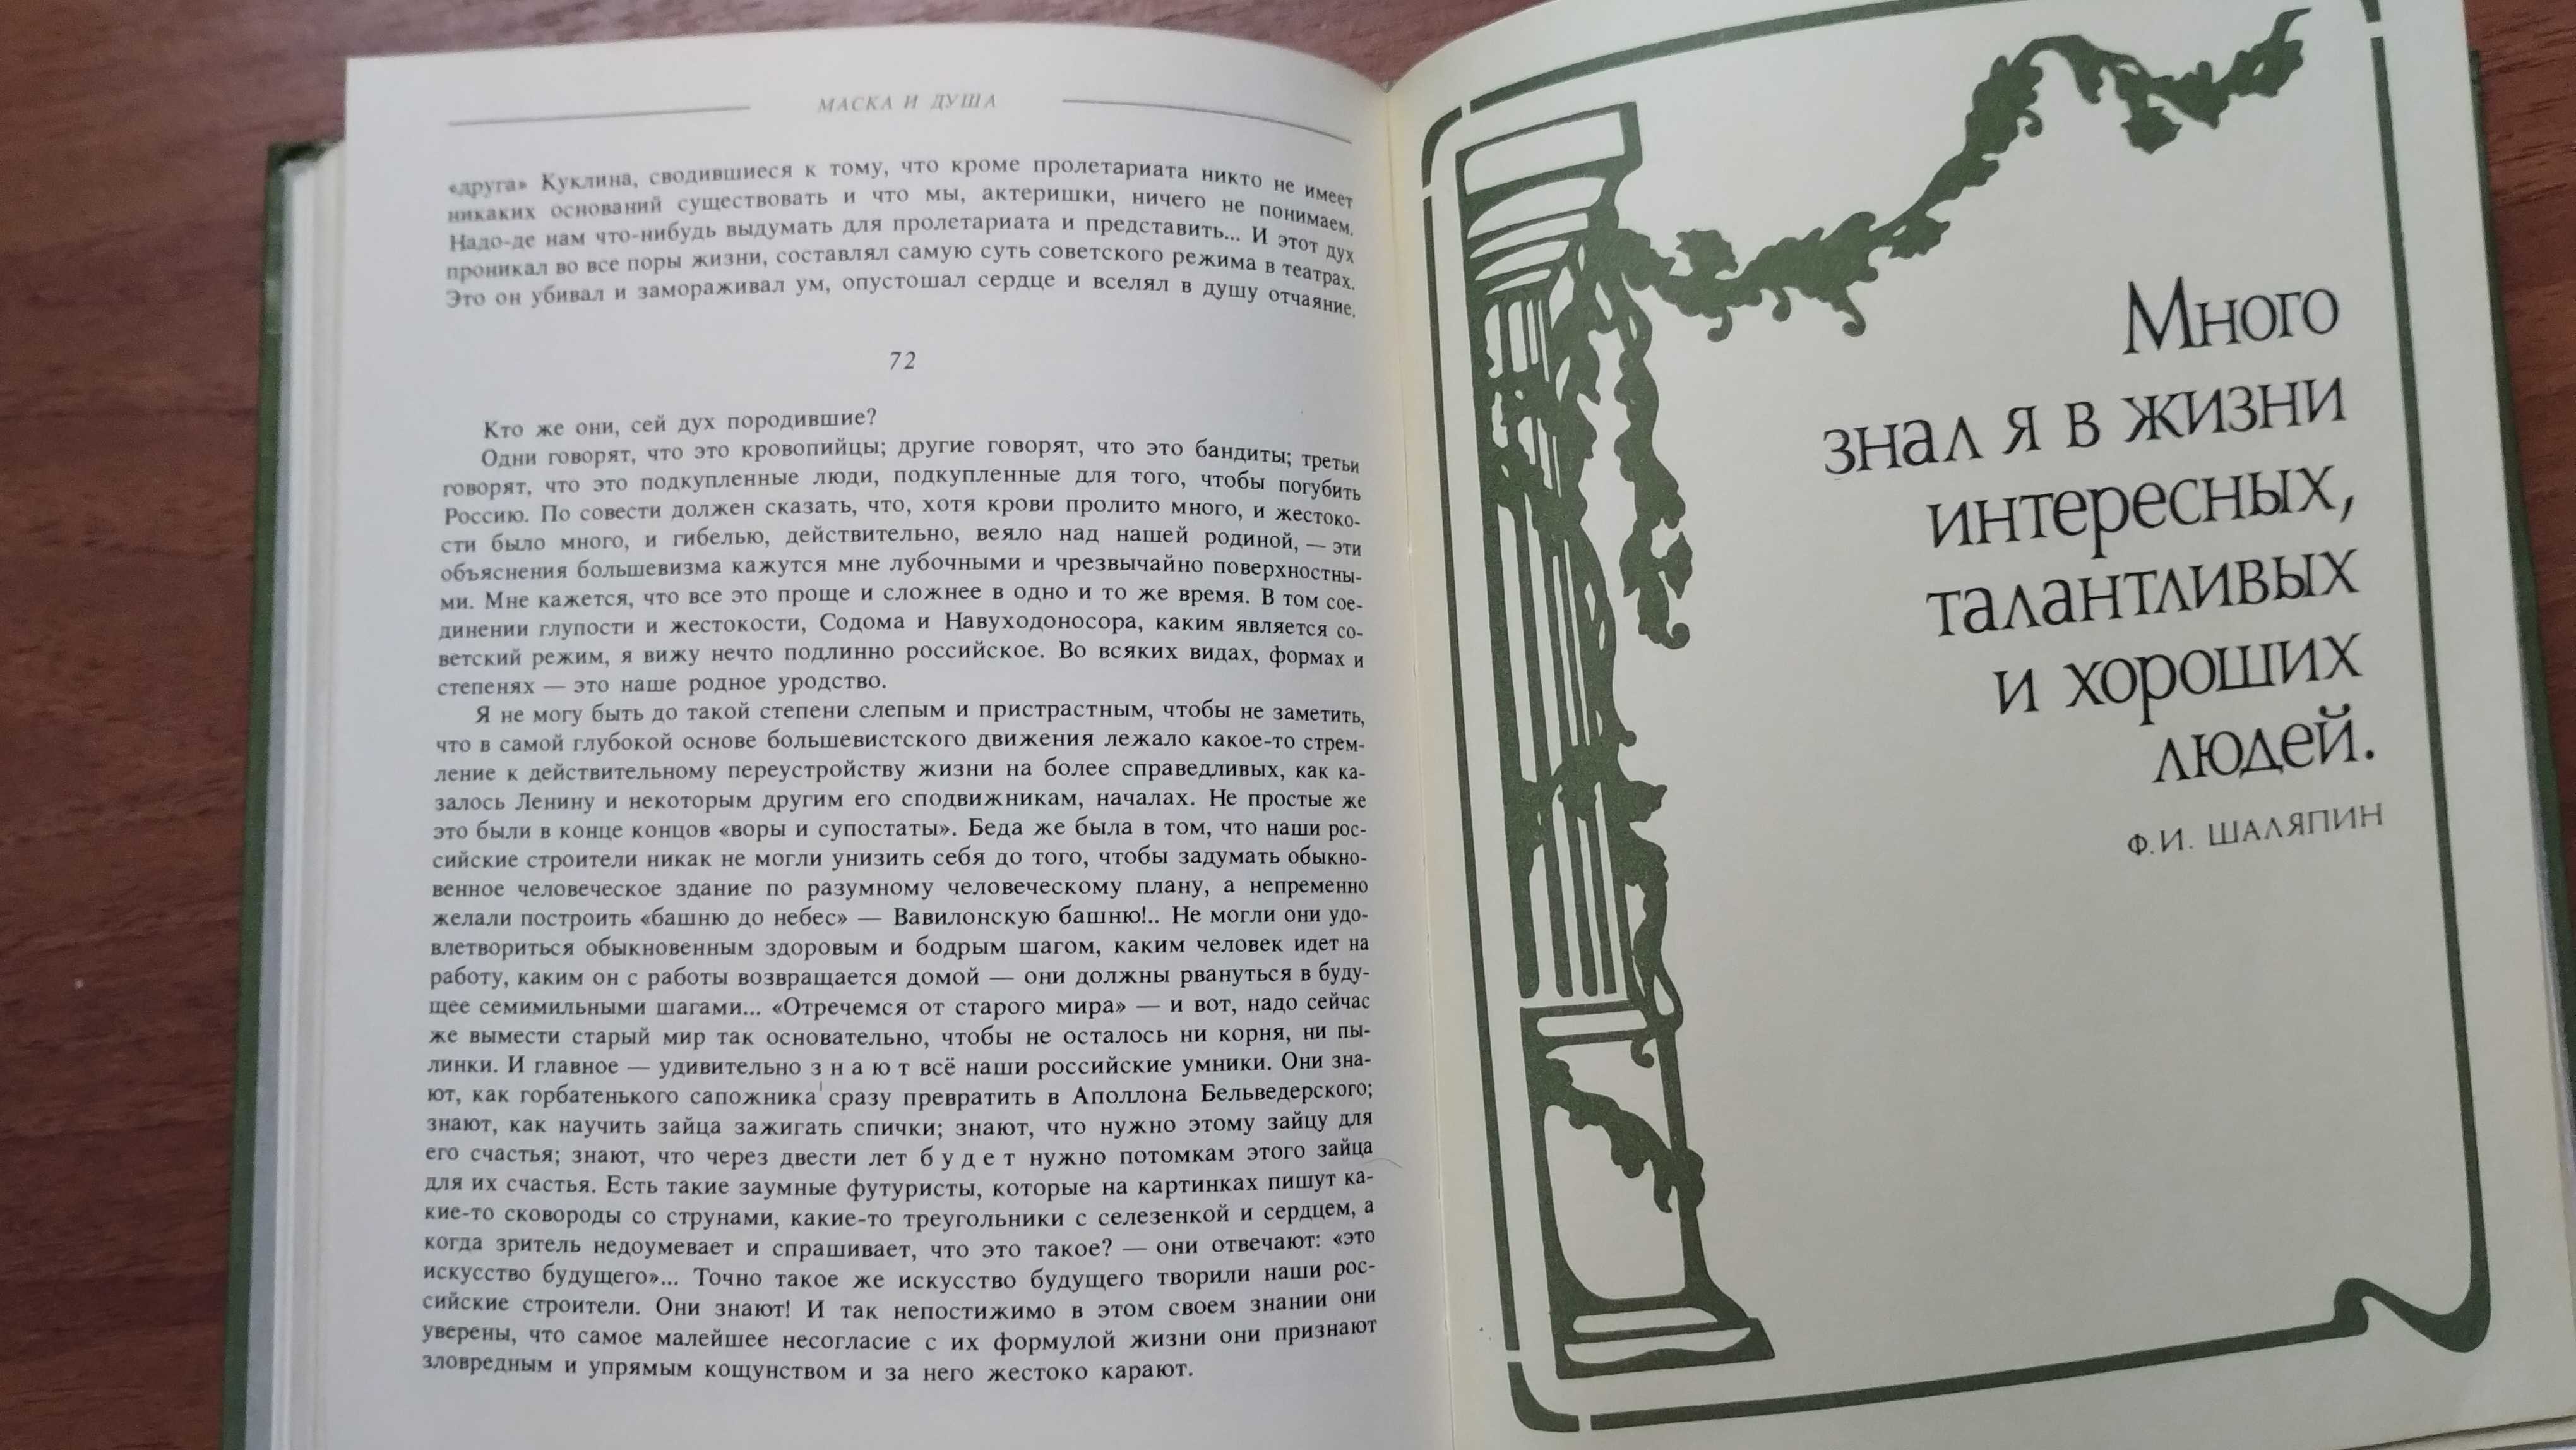 Шаляпин 2 книги одним лотом "Маска и душа", "Повести о жизни"